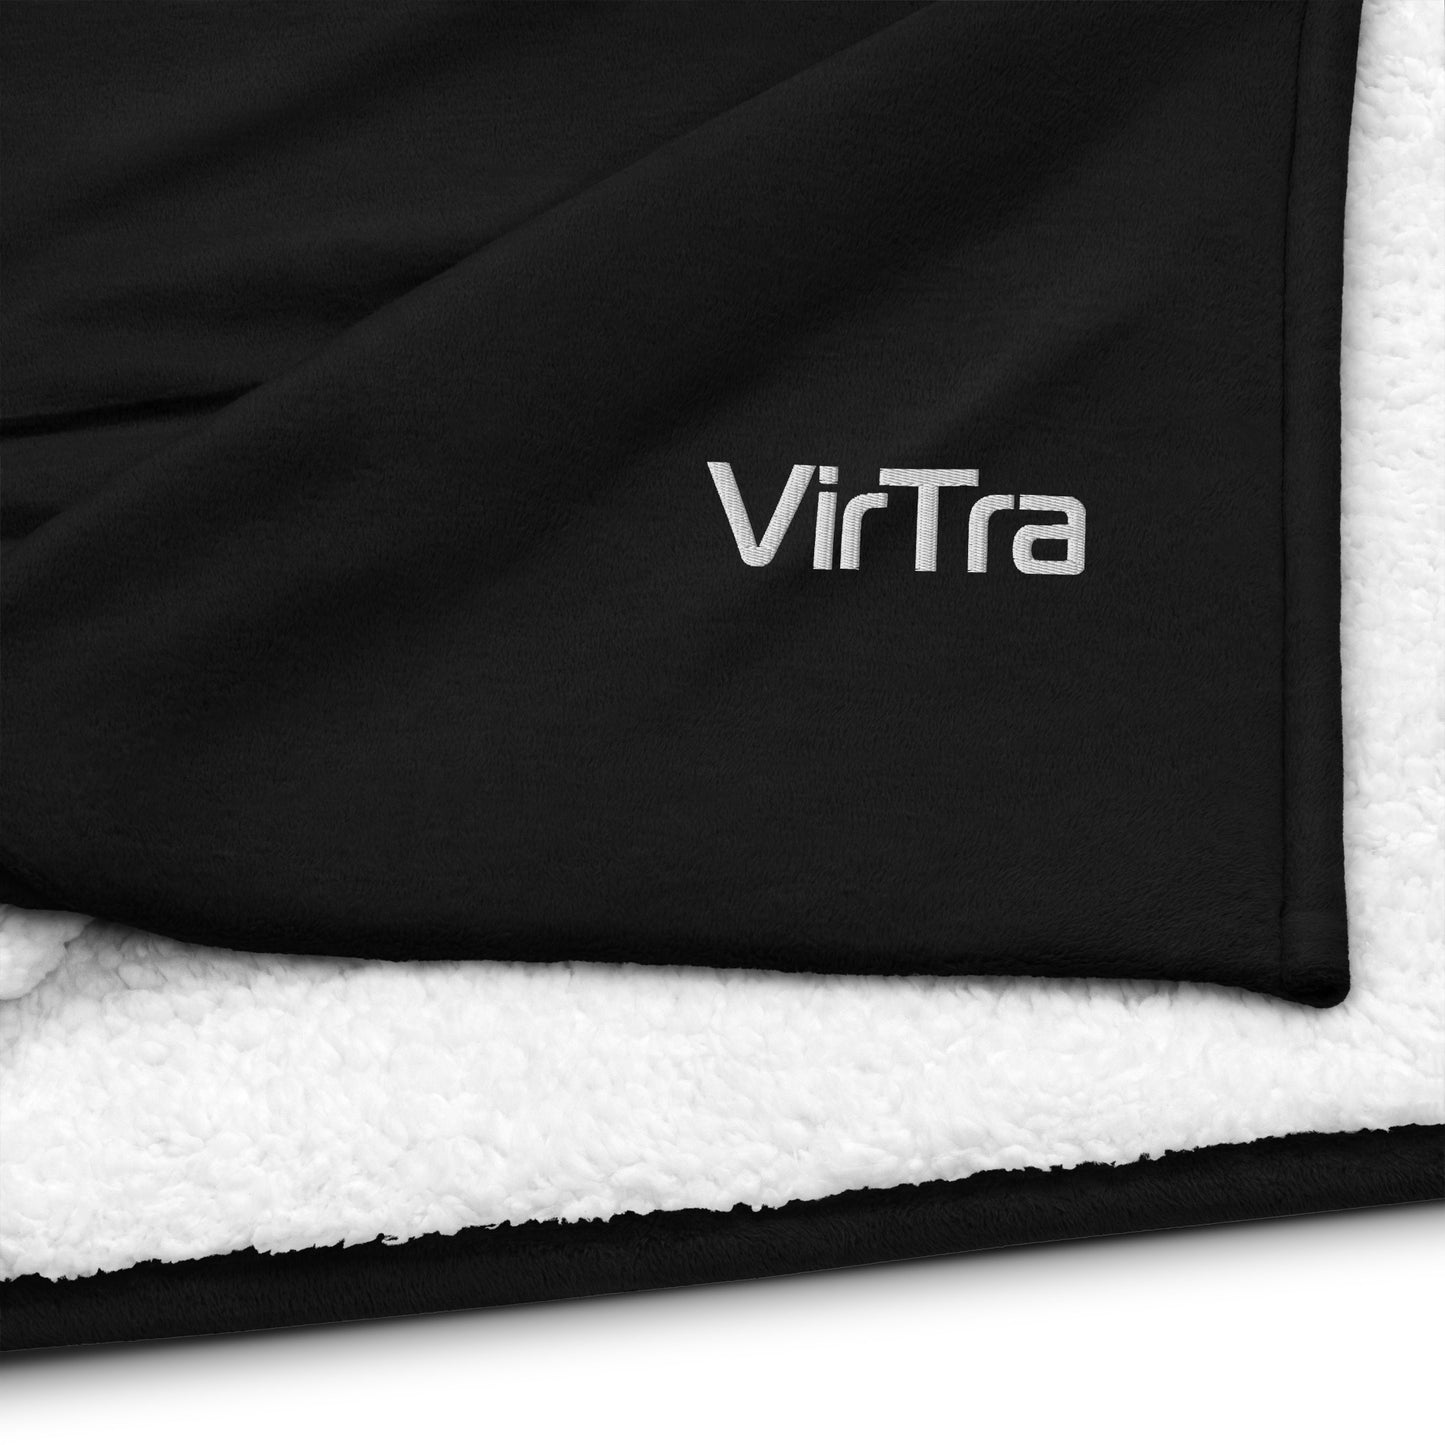 VirTra Premium sherpa blanket